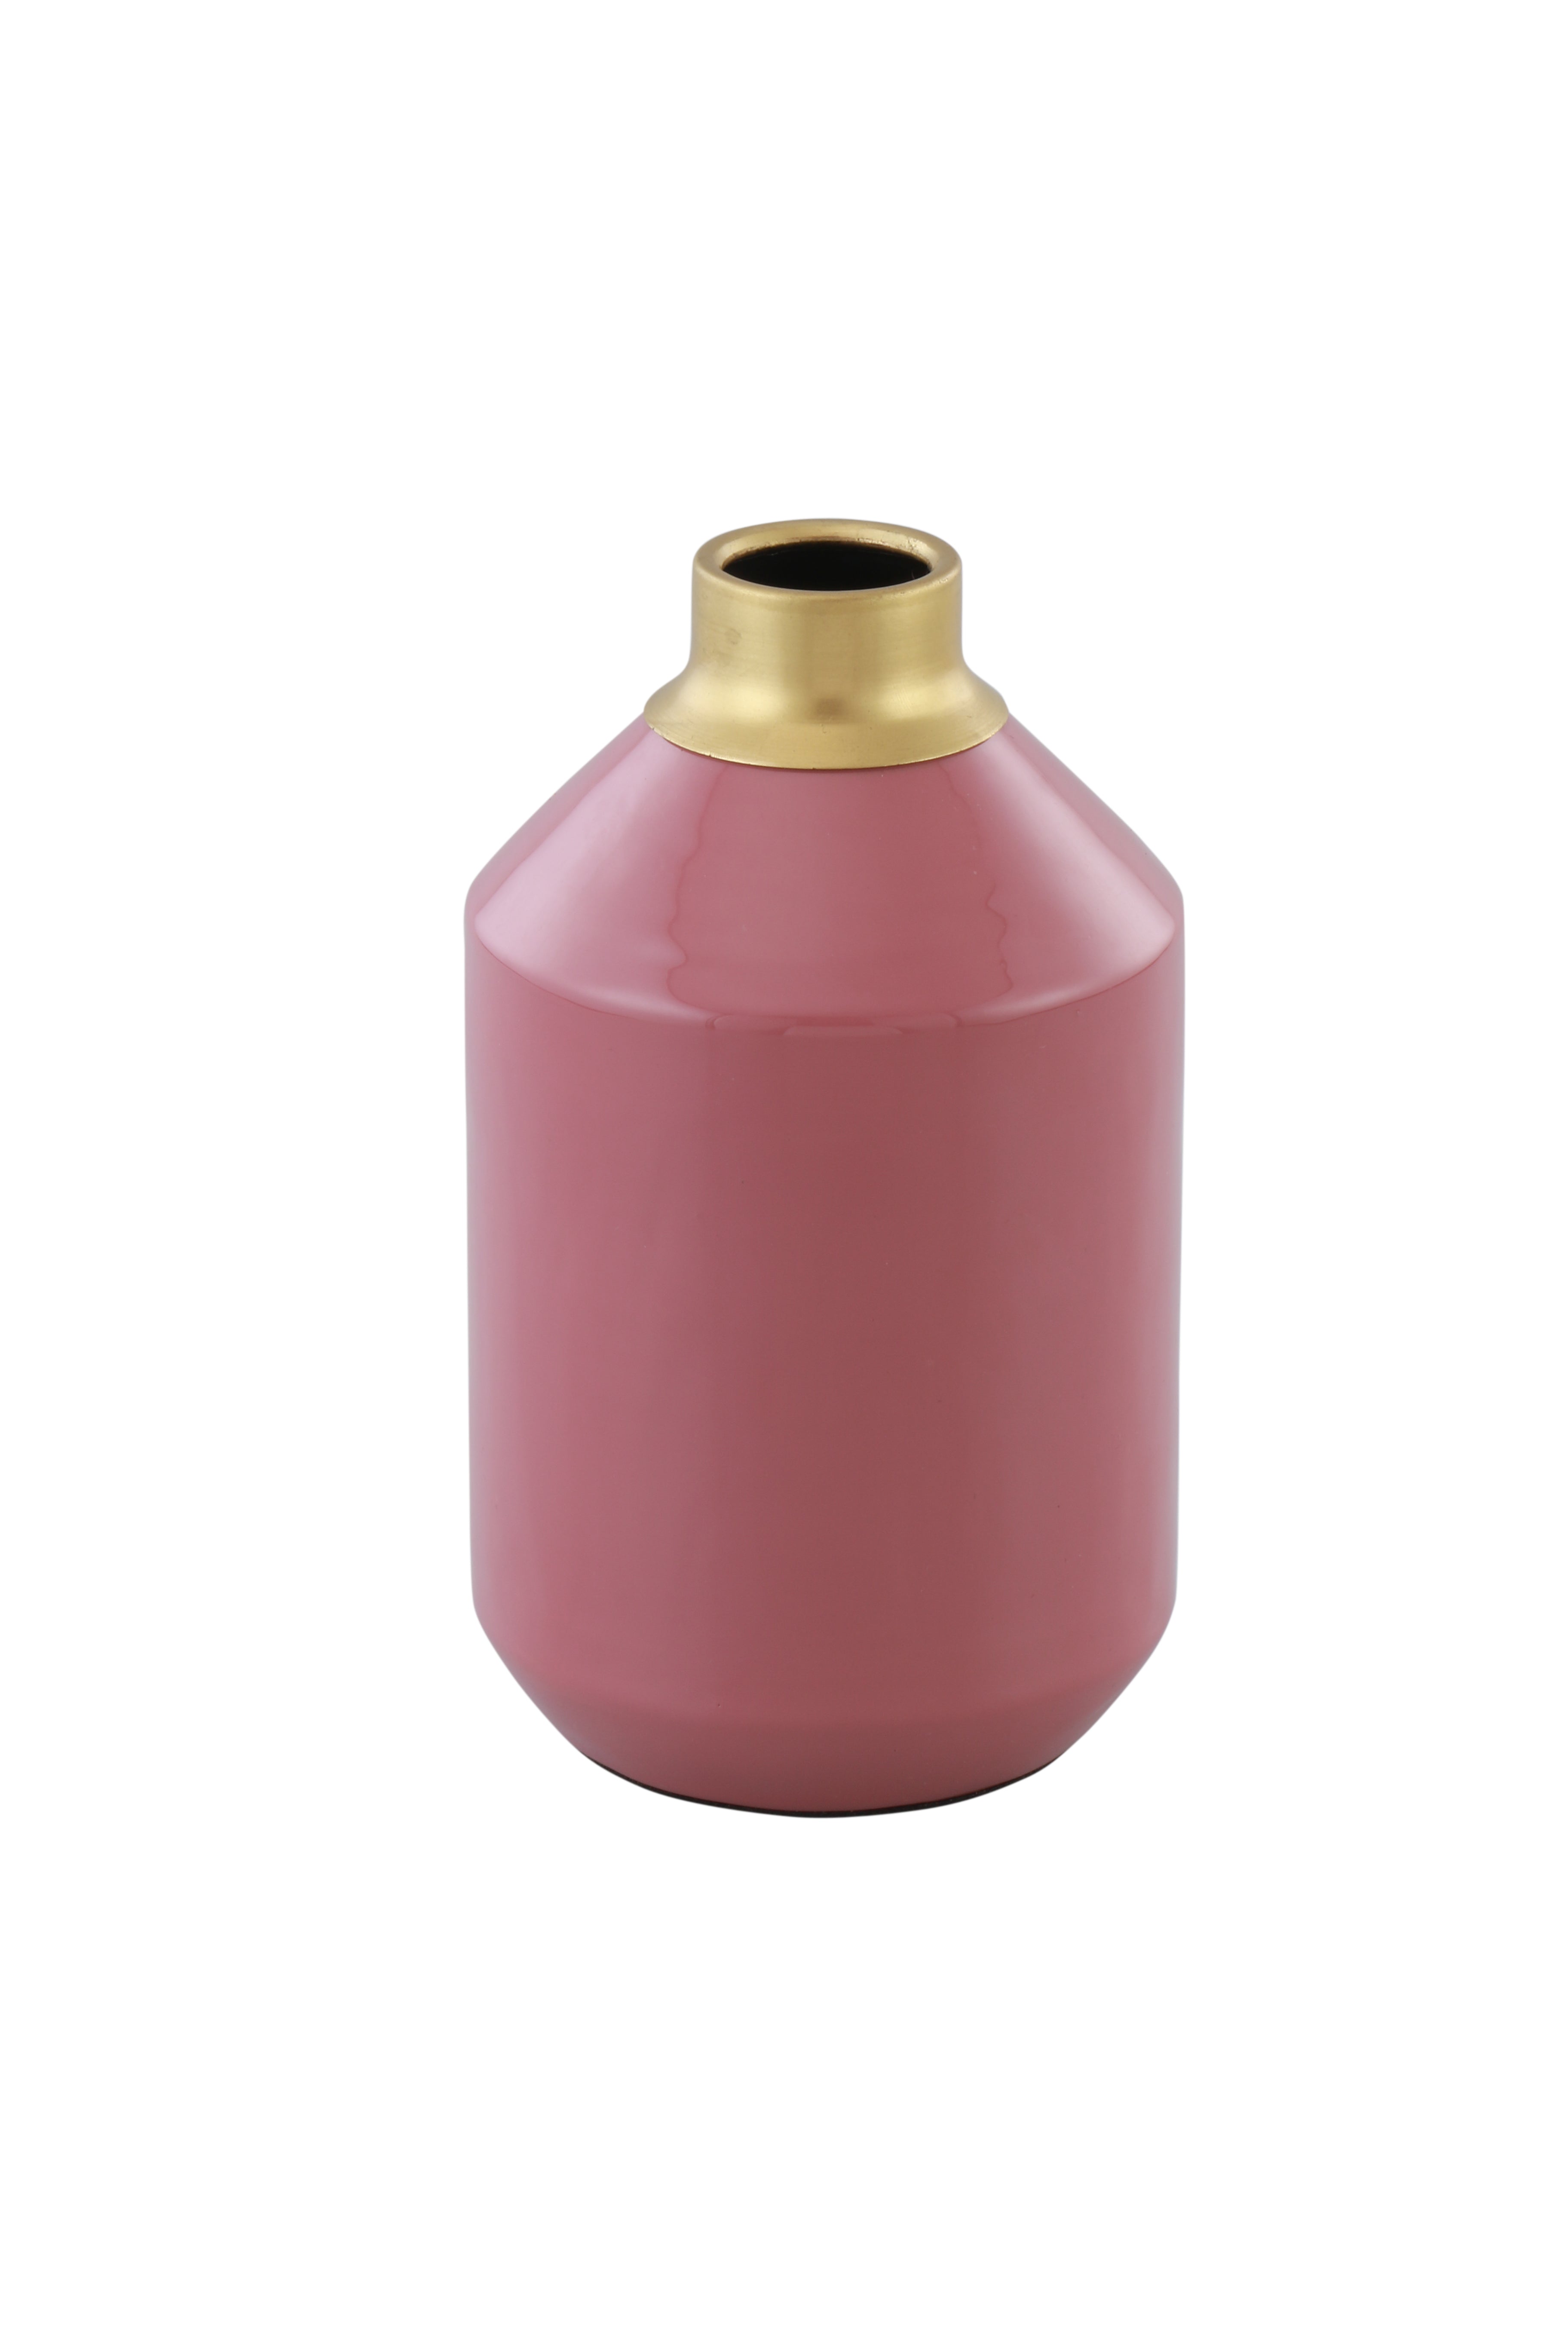 Merak Pink Metal Vase 9 inches